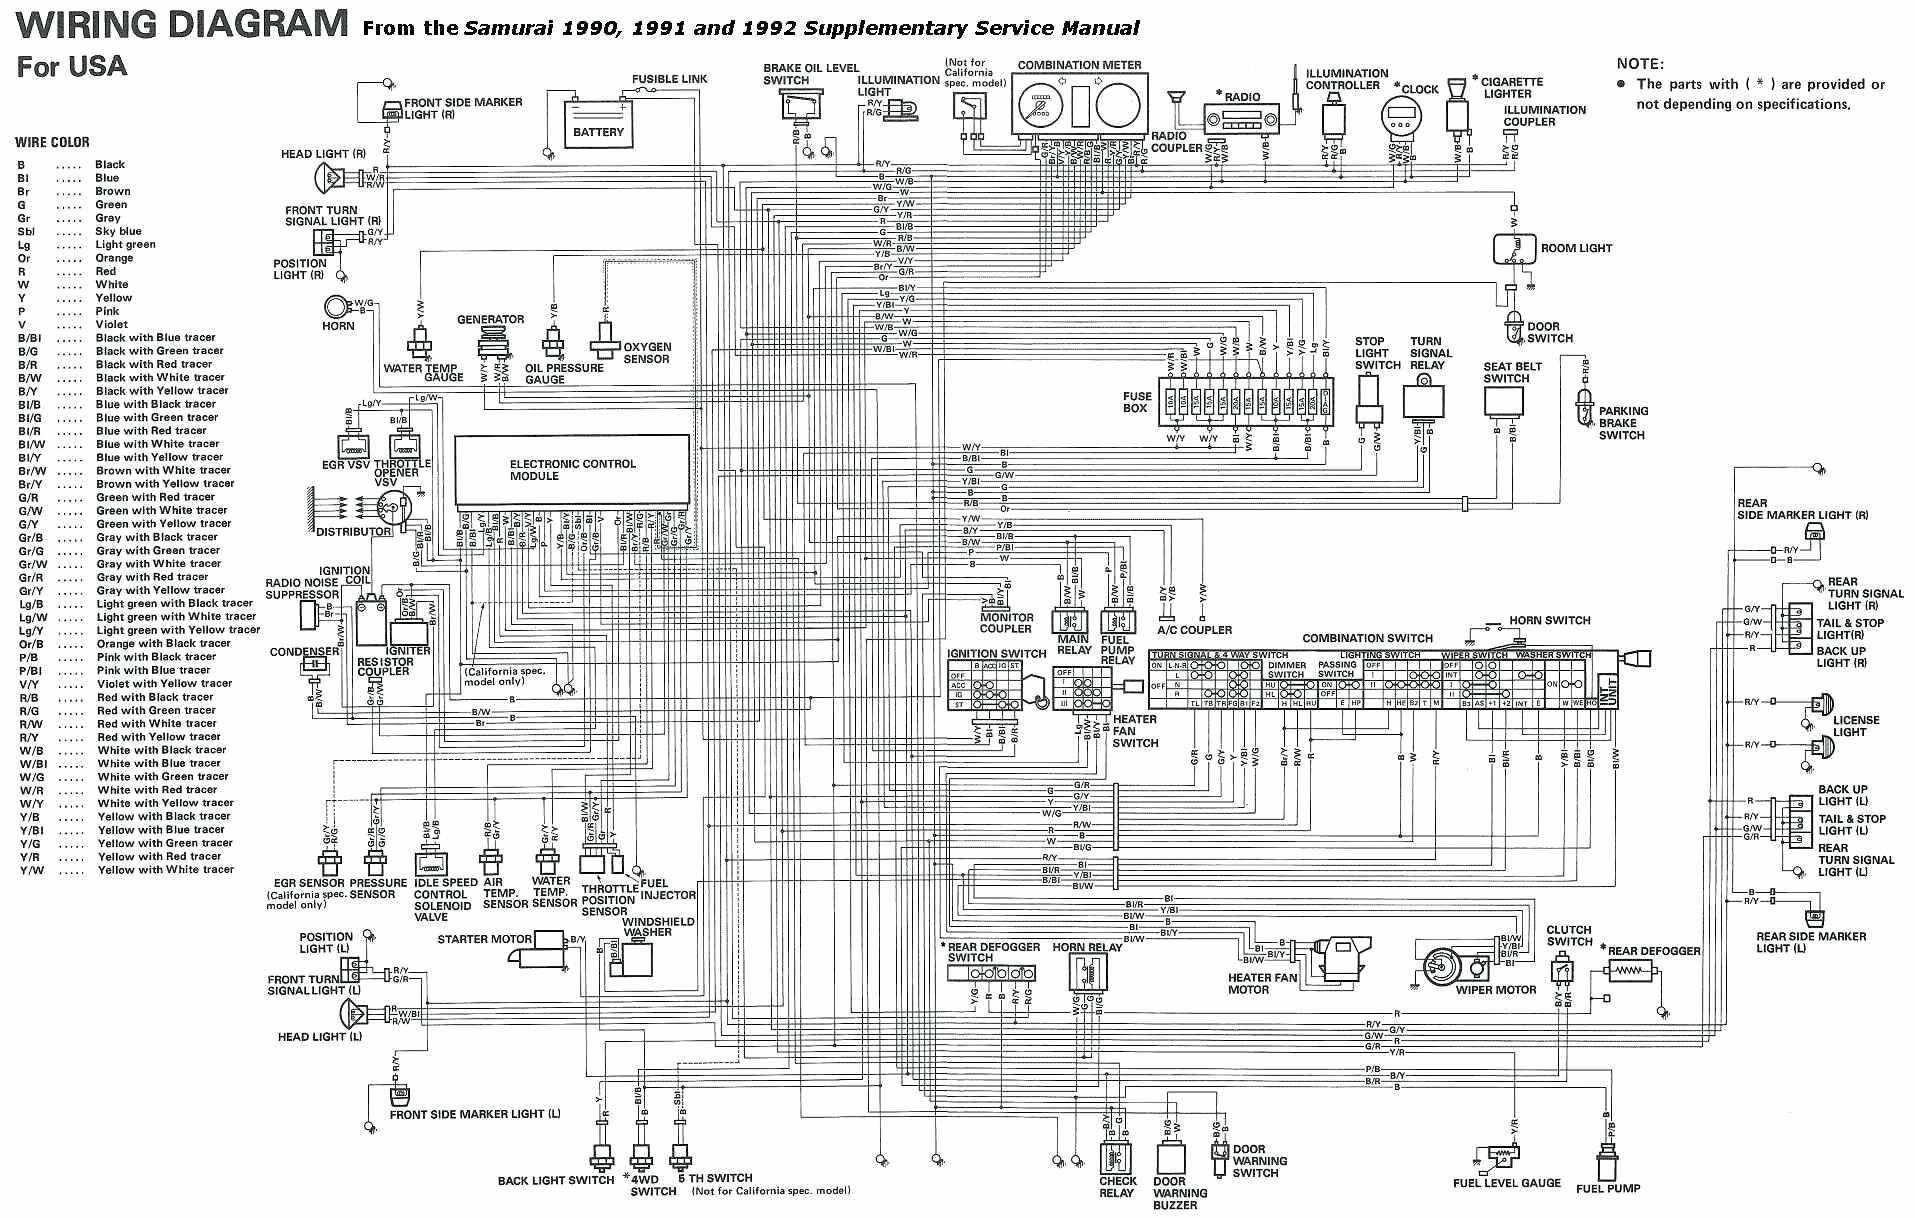 Suzuki Samurai Wiring Schematic Daihatsu Mira Wiring Diagram Car Manuals Diagrams Fault